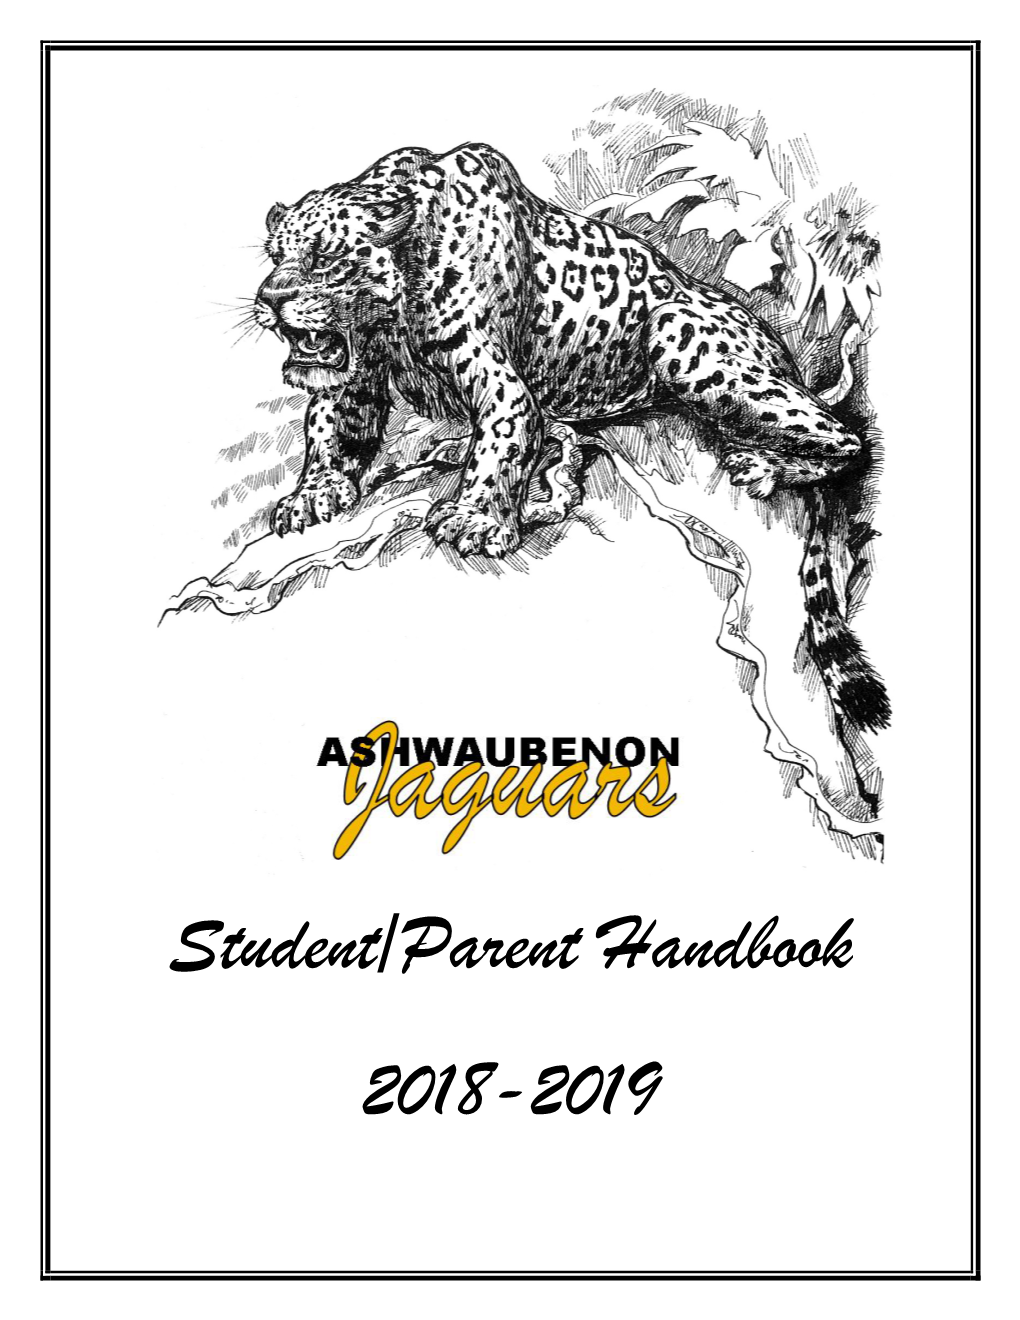 Student/Parent Handbook 2018-2019